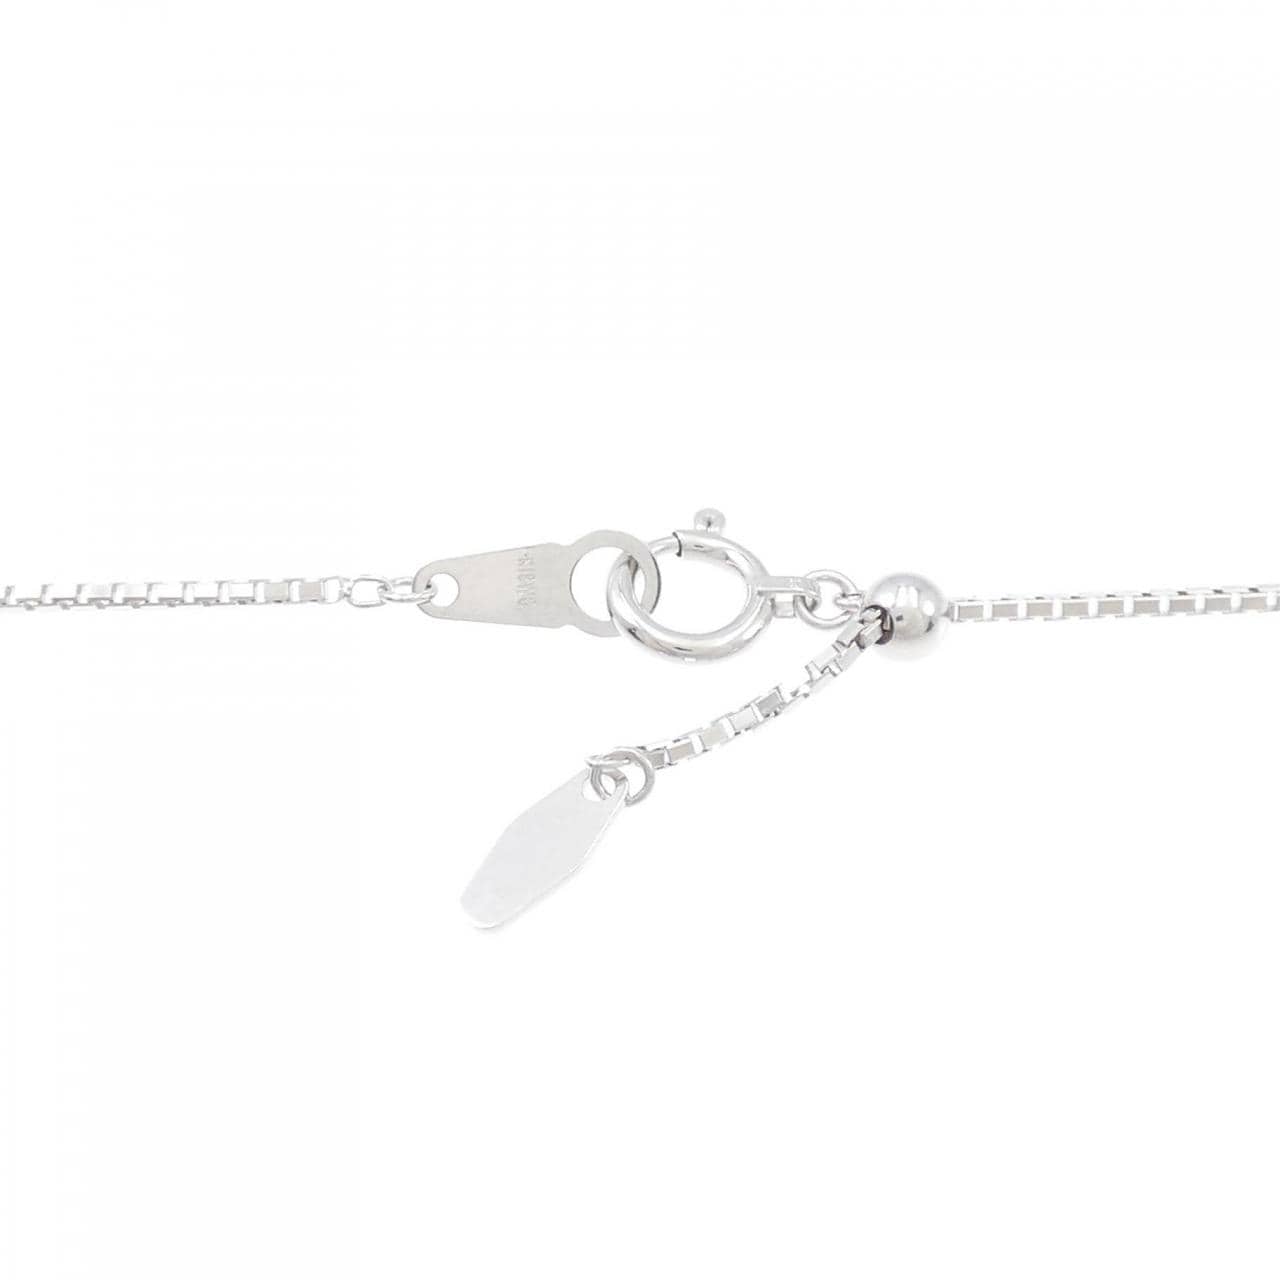 K18WG sapphire necklace 2.60CT